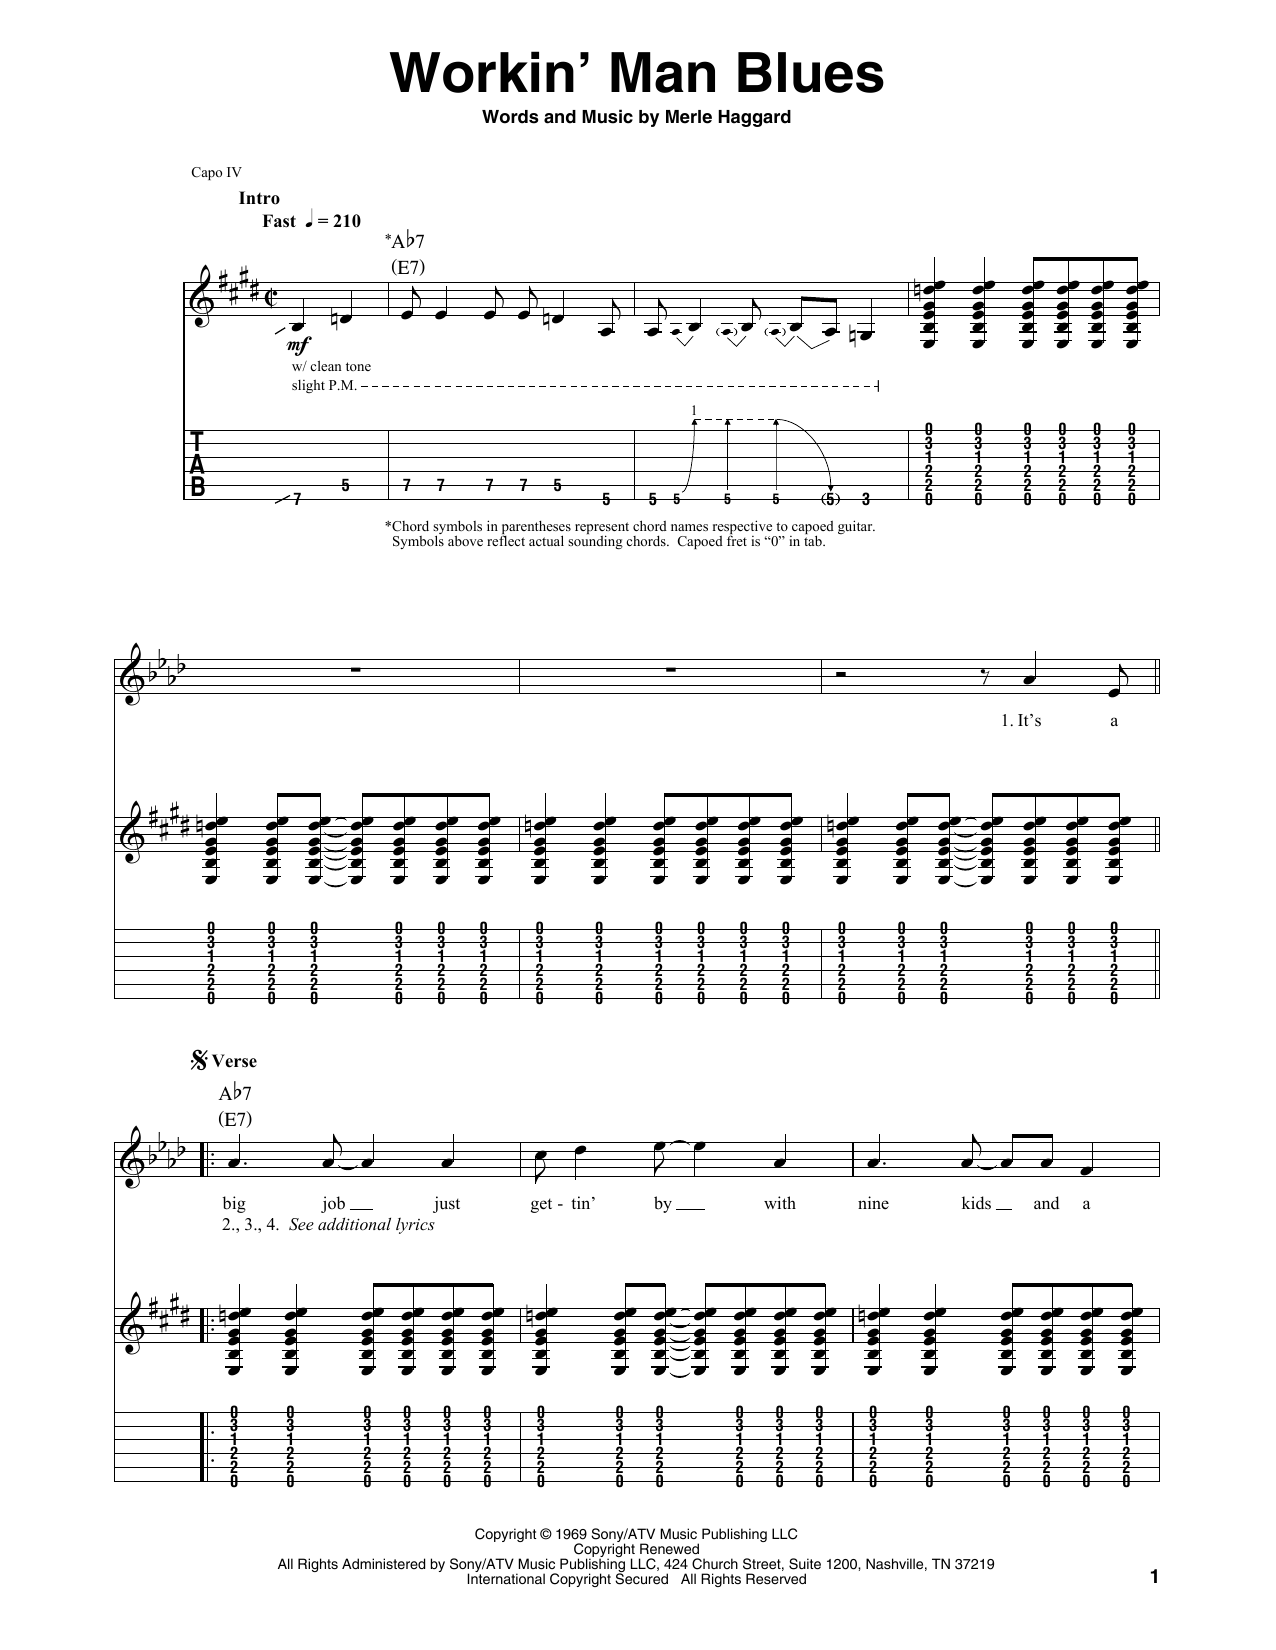 Merle Haggard Workin' Man Blues Sheet Music Notes & Chords for Guitar Tab - Download or Print PDF